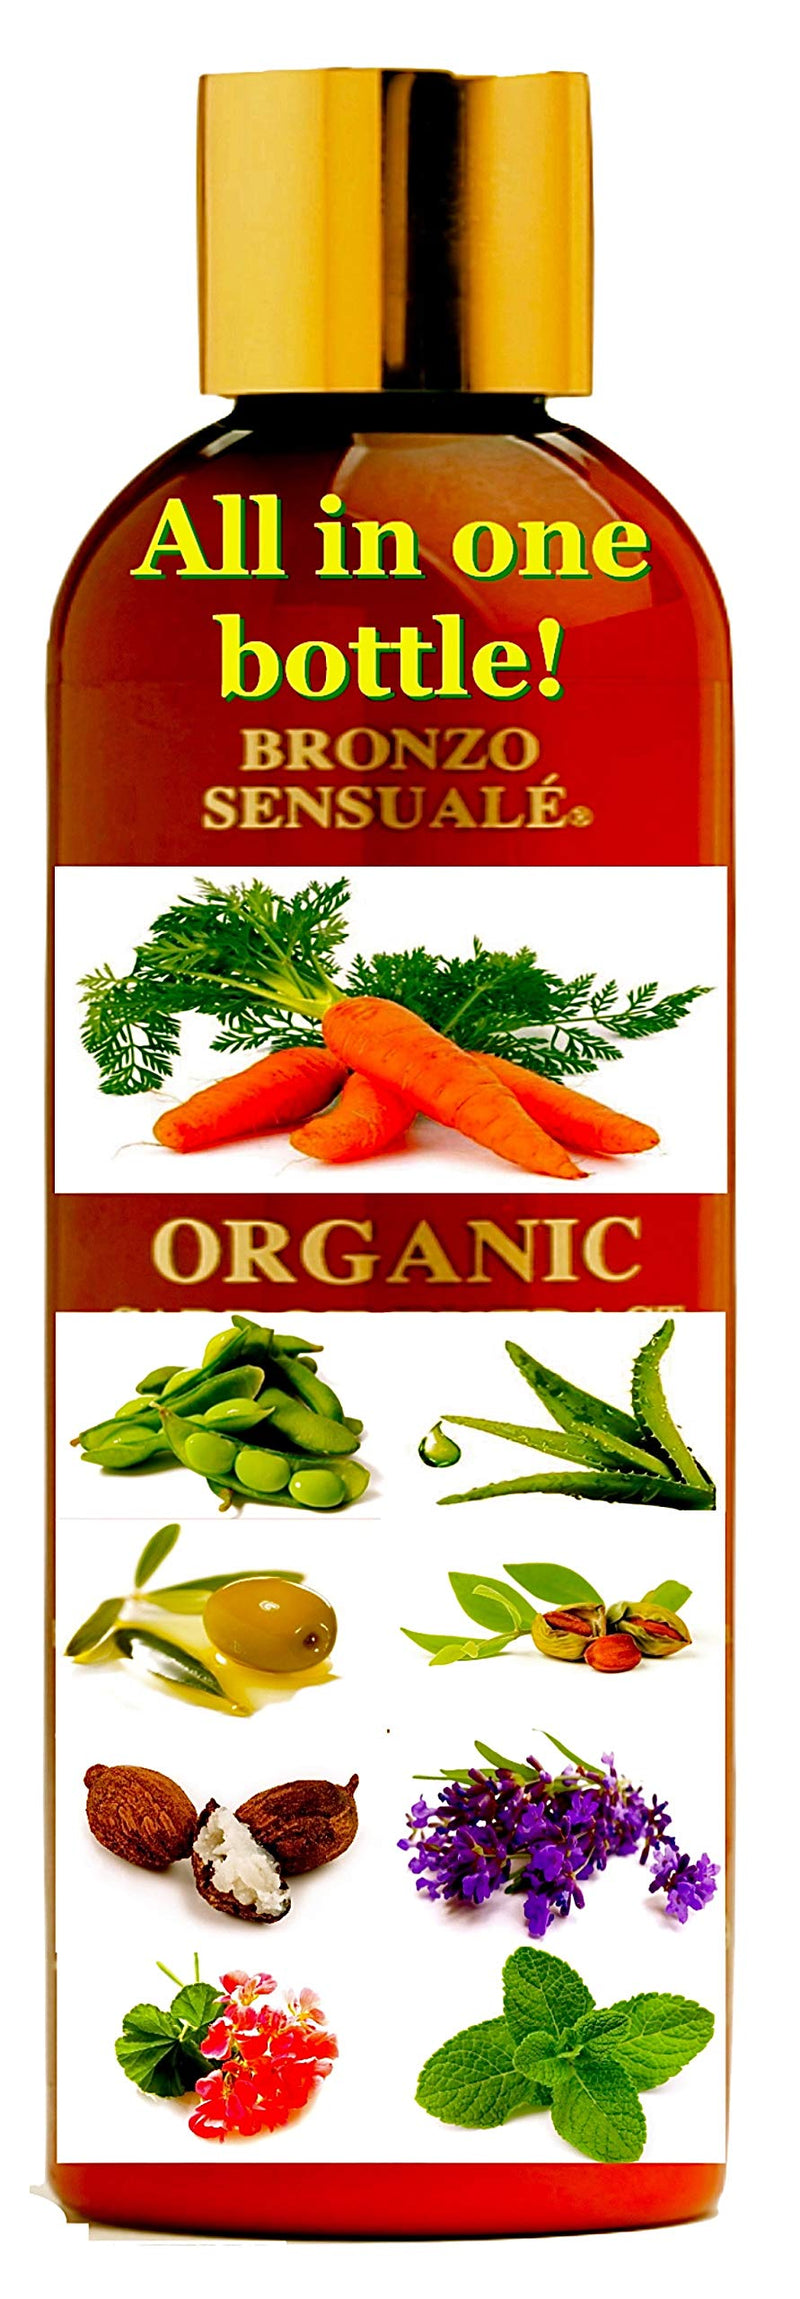 [Australia] - Bronzo Sensuale SPF 15 Sunscreen Deep Golden Tanning Organic Carrot Lotion 8.5 Ounces 